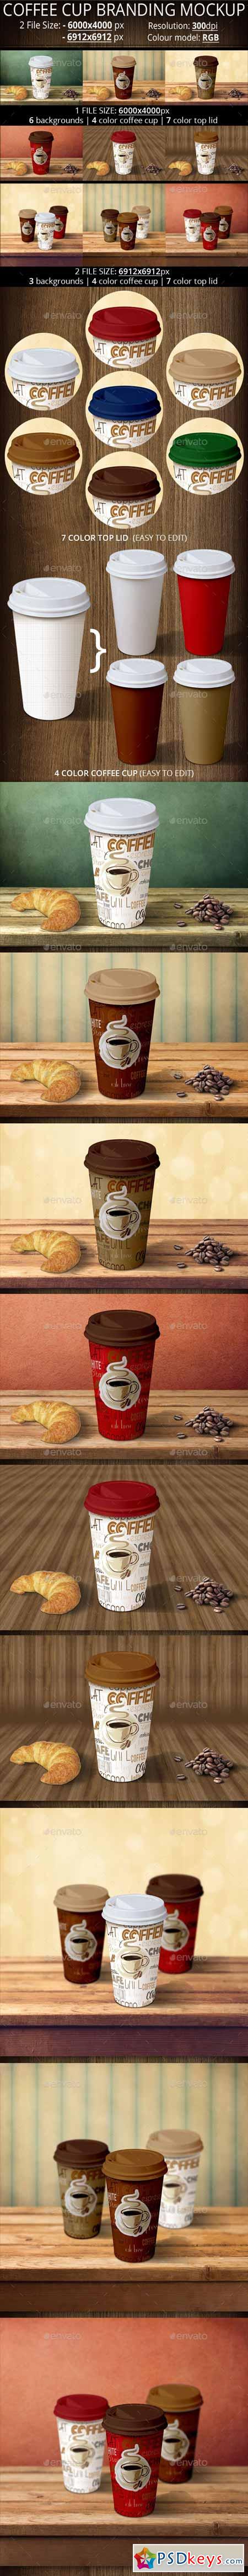 Two Coffee Cup Branding Mockup 11541457